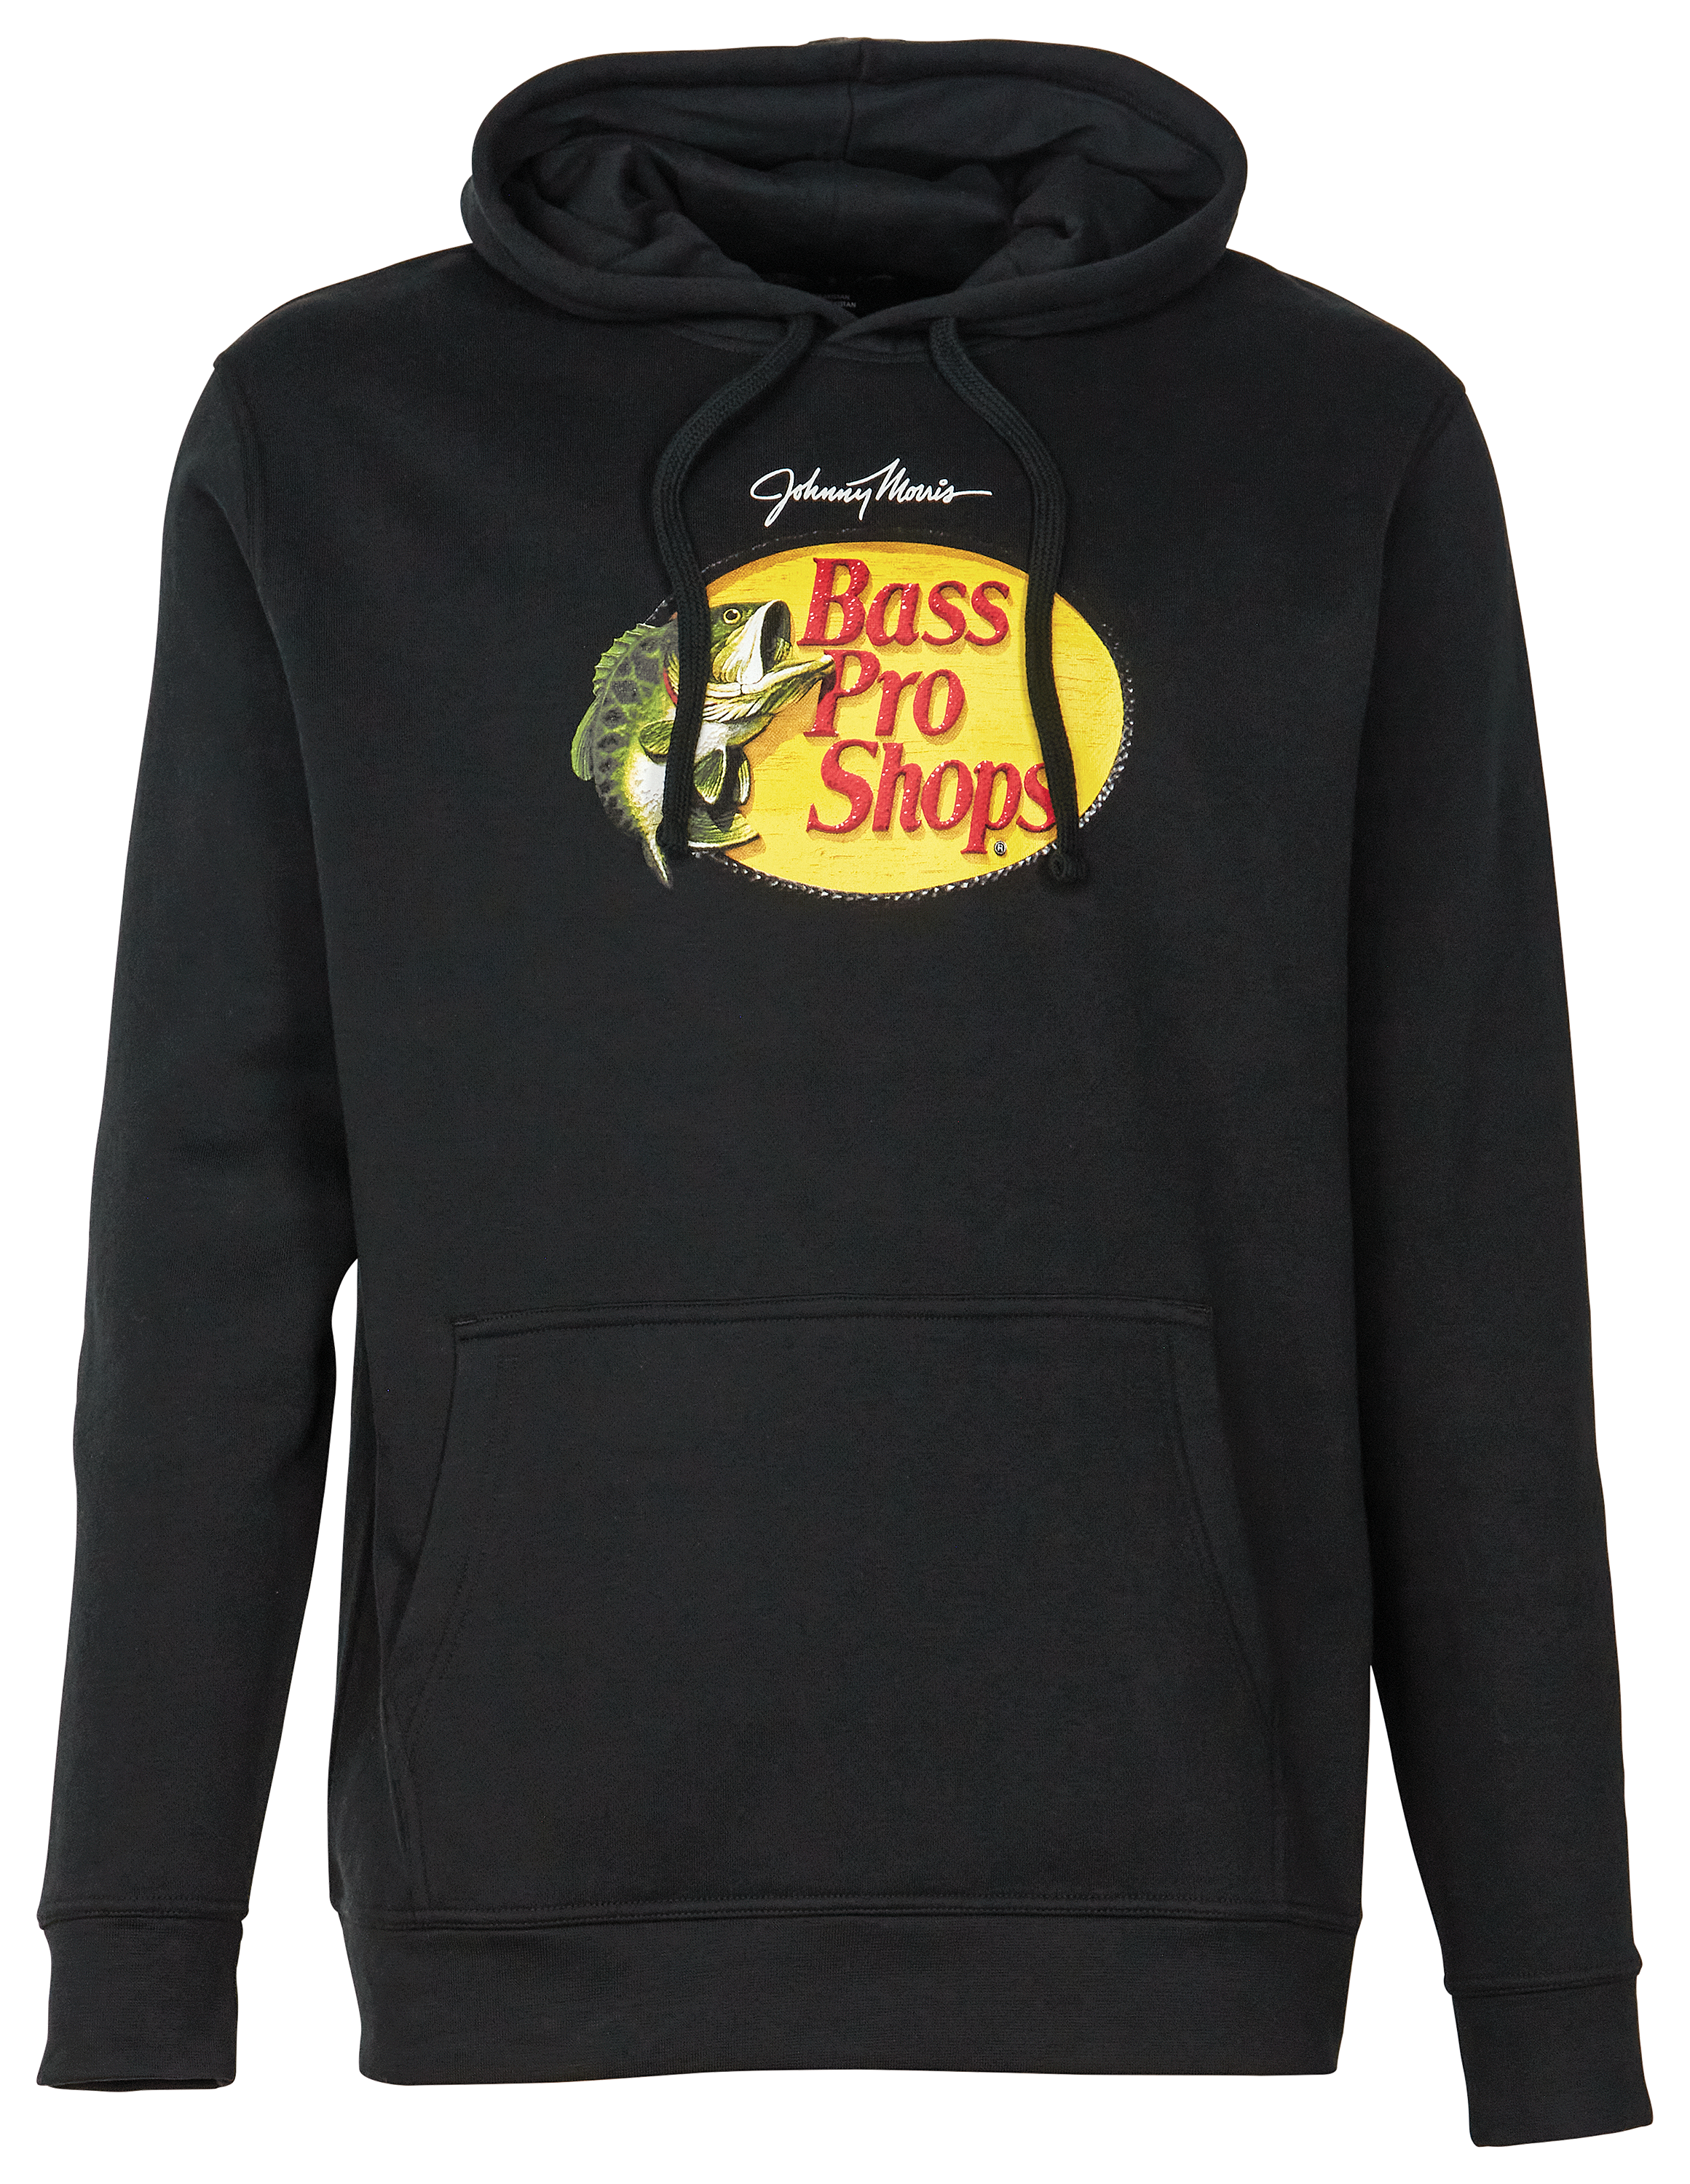 New! Bass Pro Shops Logo Long-Sleeve Hoodie